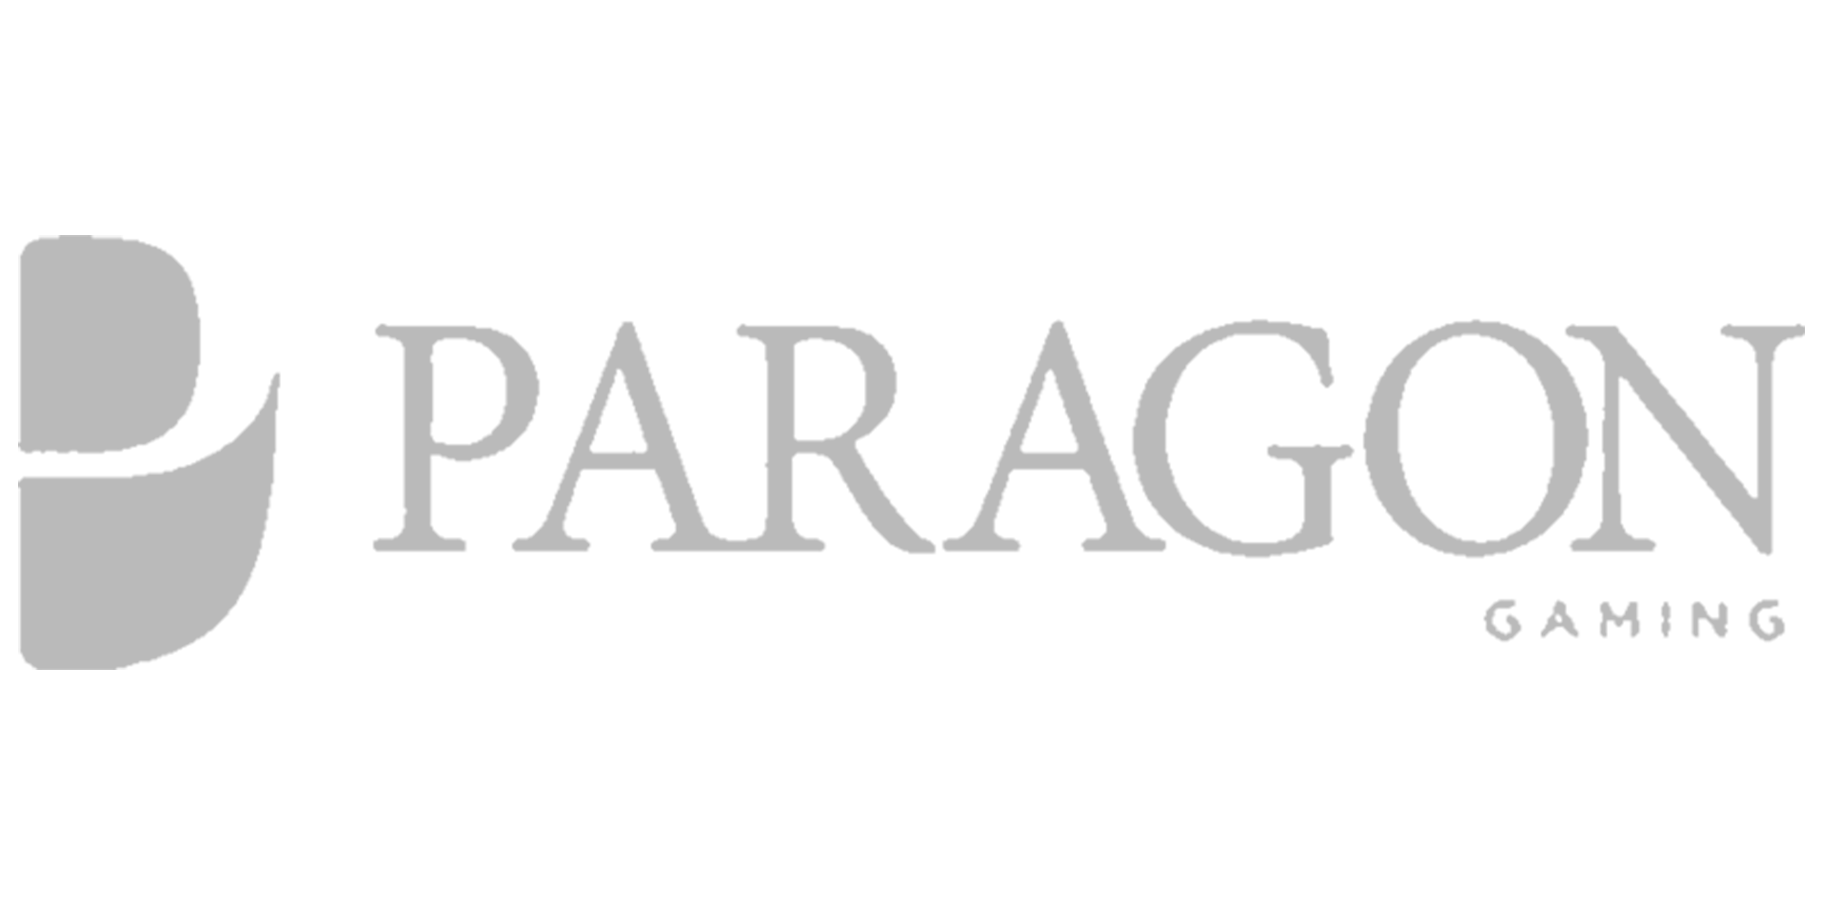 Paragon Gaming